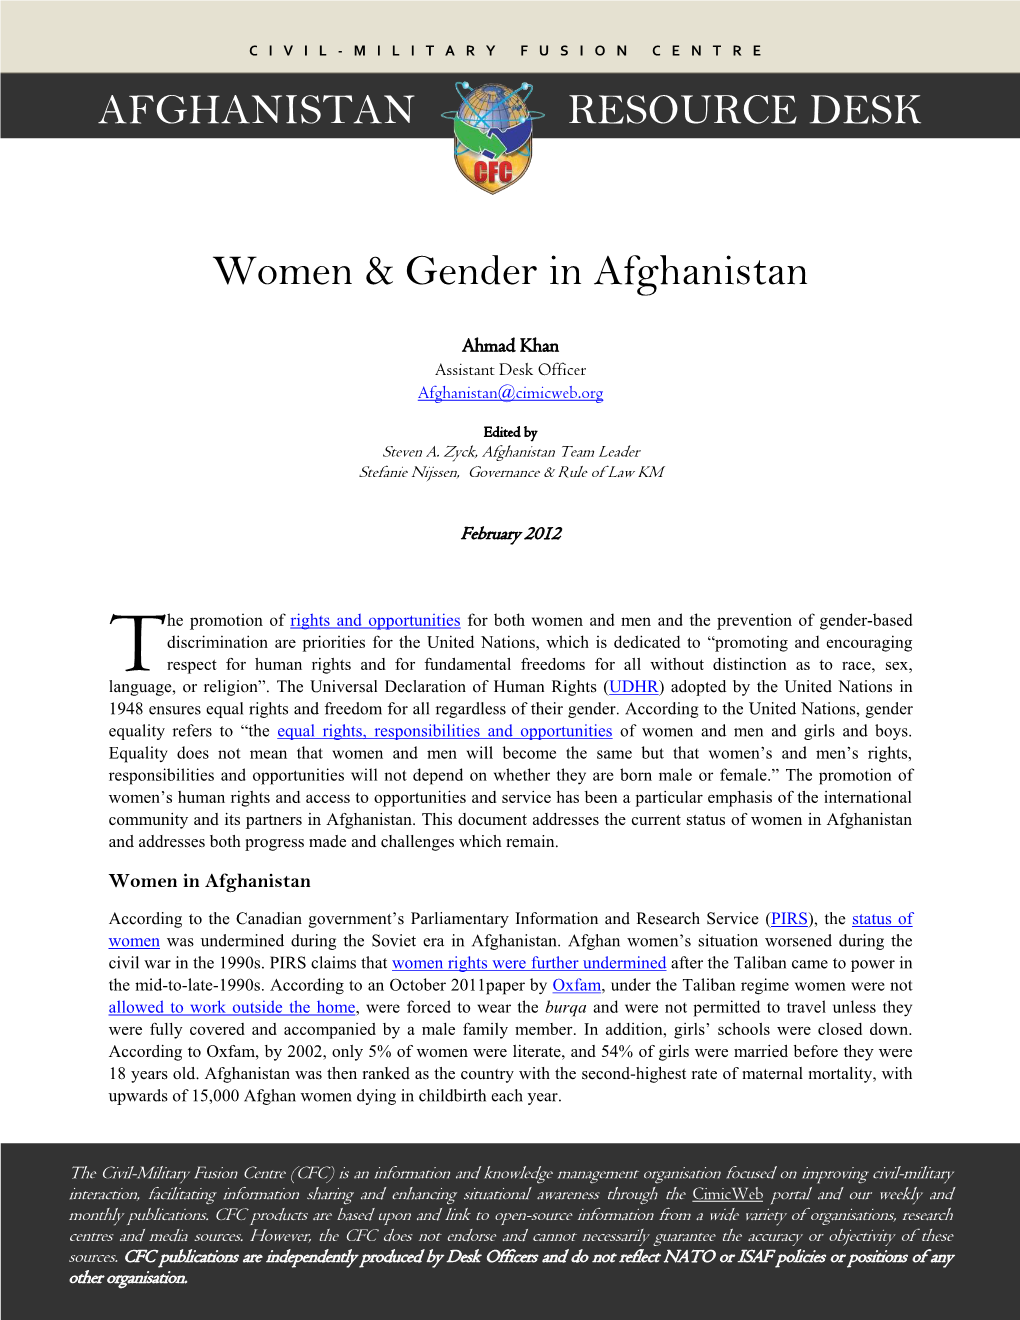 Women and Gender in Afghanistan